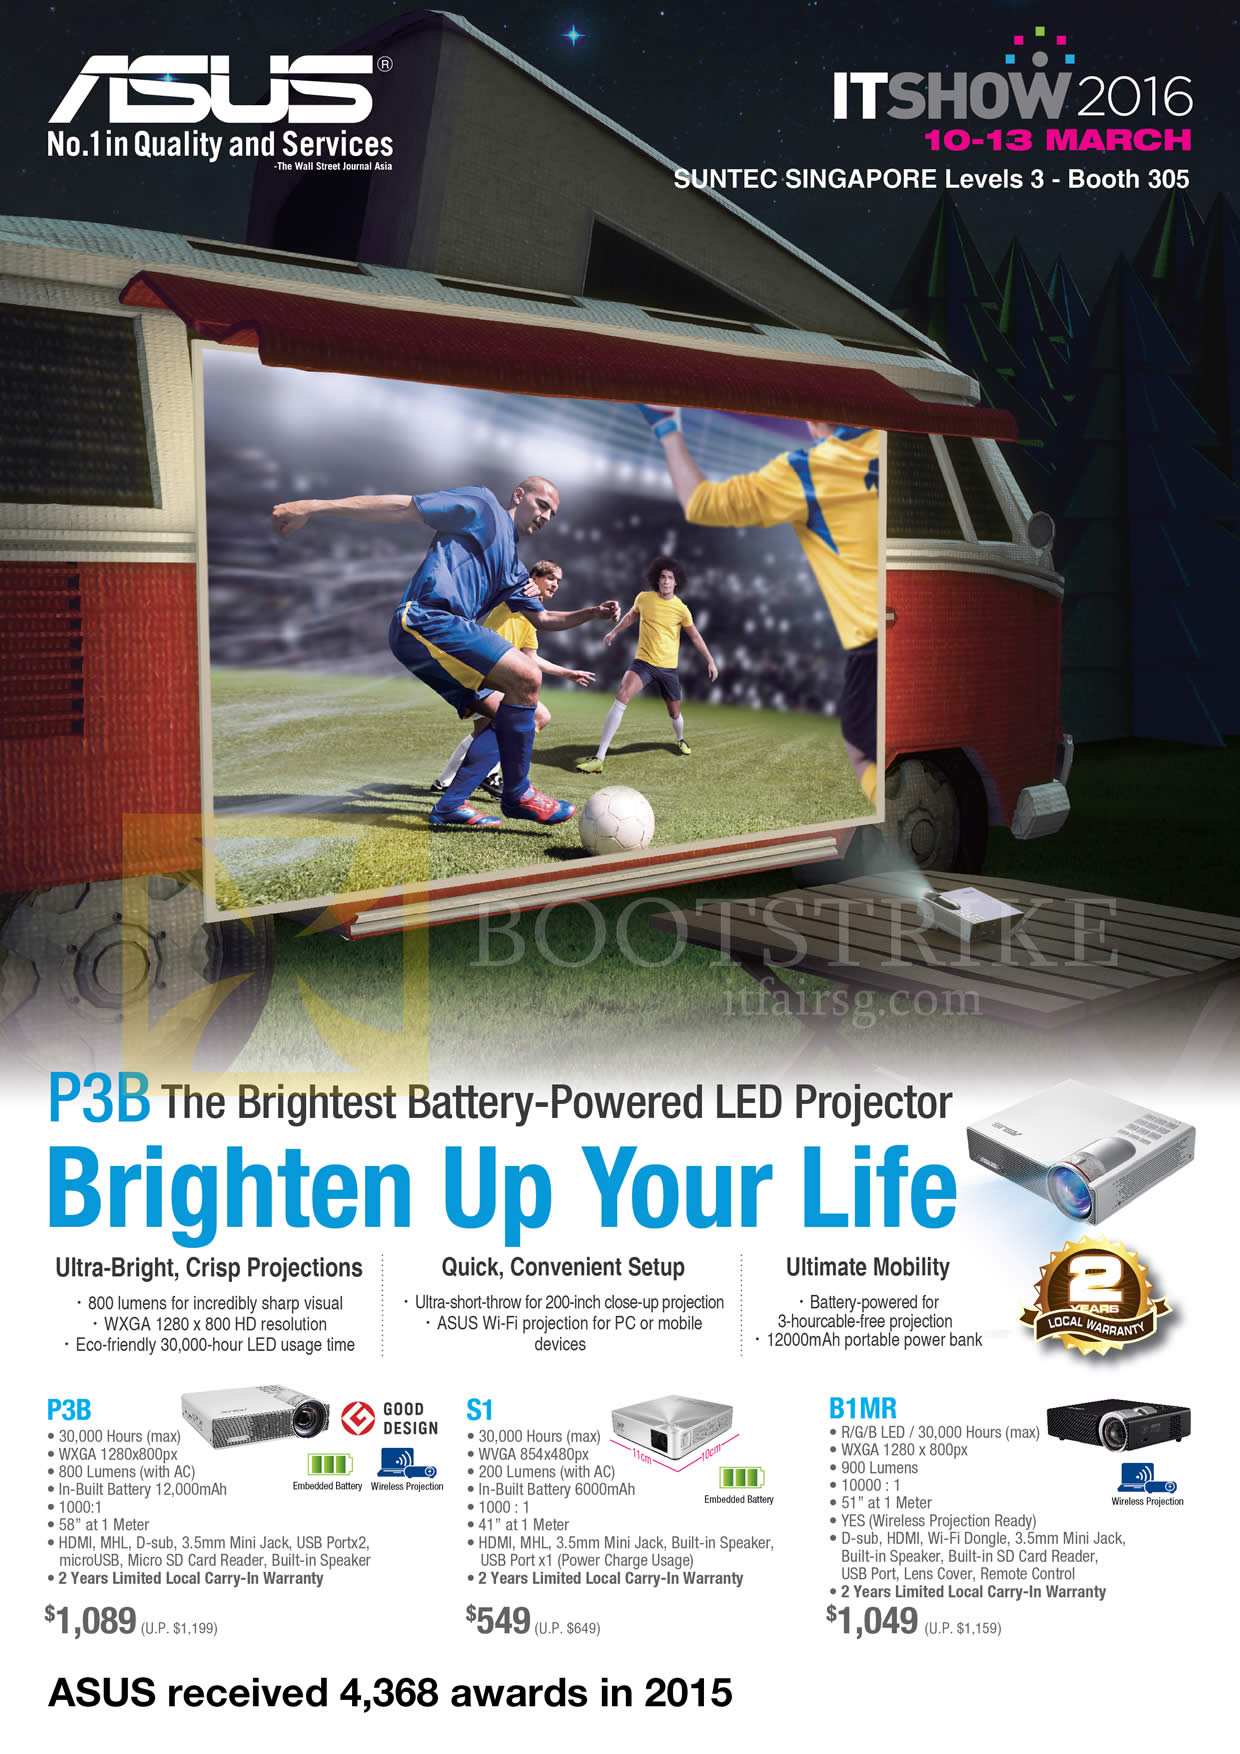 IT SHOW 2016 price list image brochure of ASUS Projectors P3B, S1, B1MR